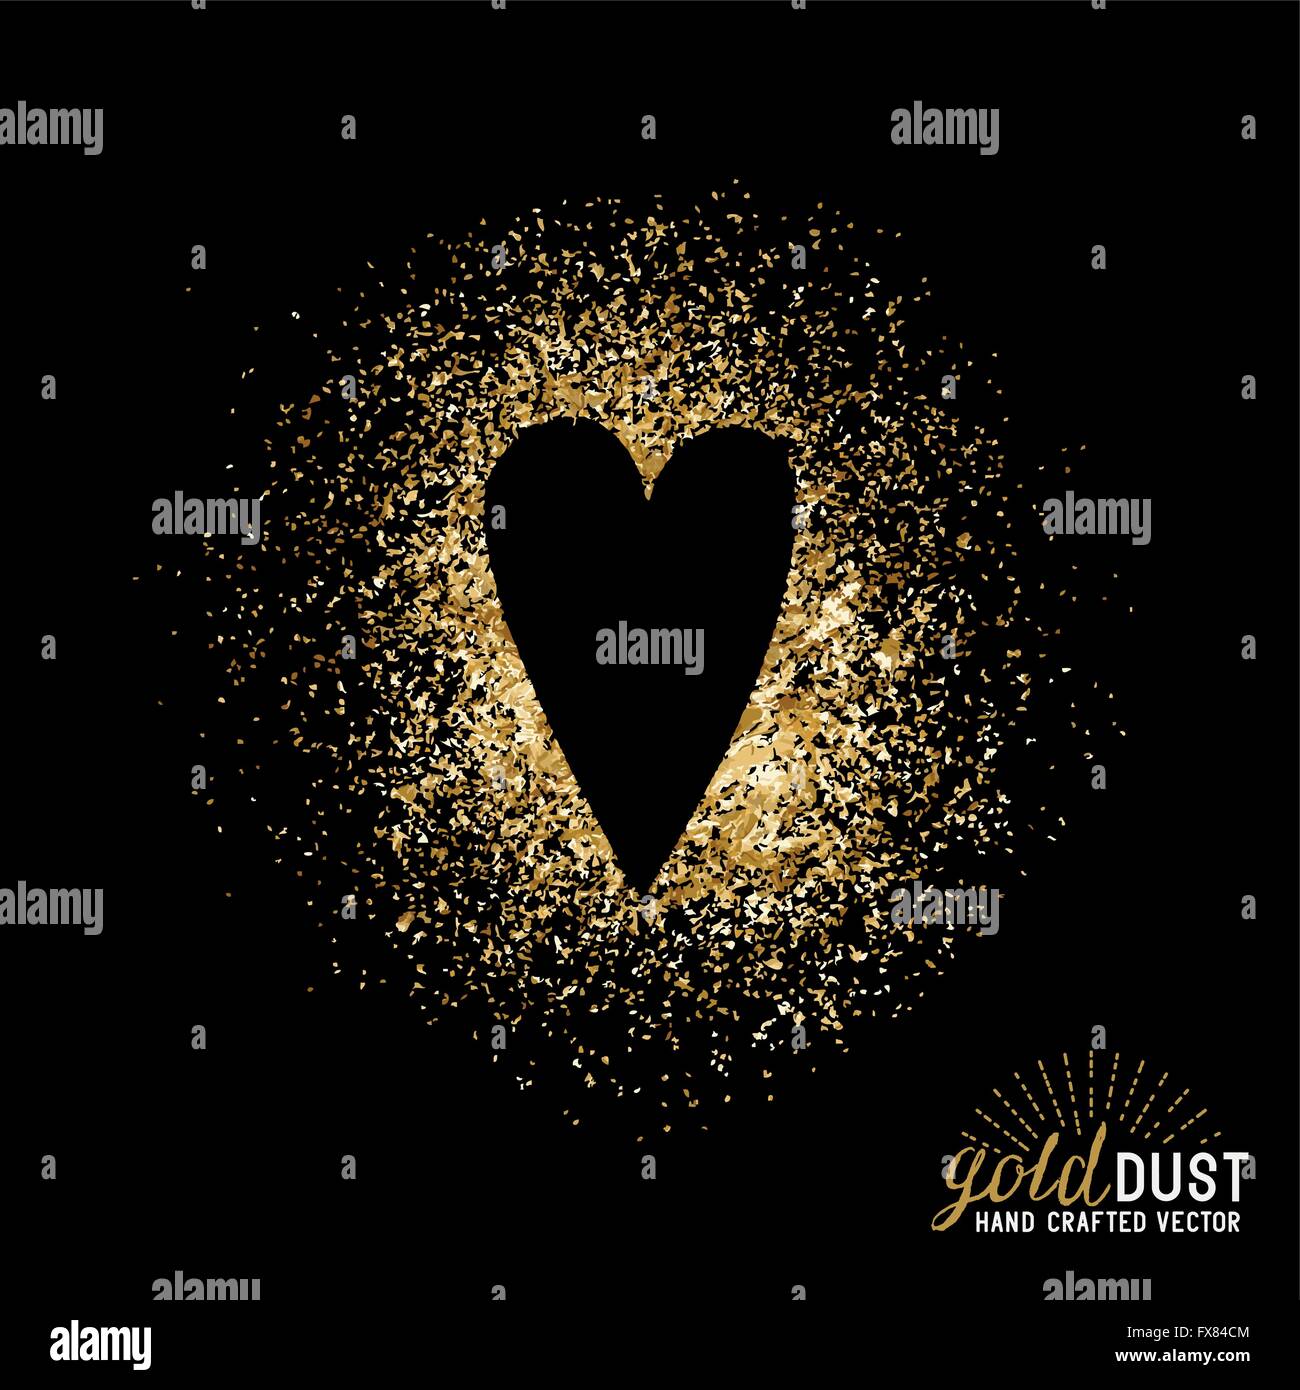 Gold Dust Love Vector. Heart shape in gold foil dust. Vector illustration. Stock Vector